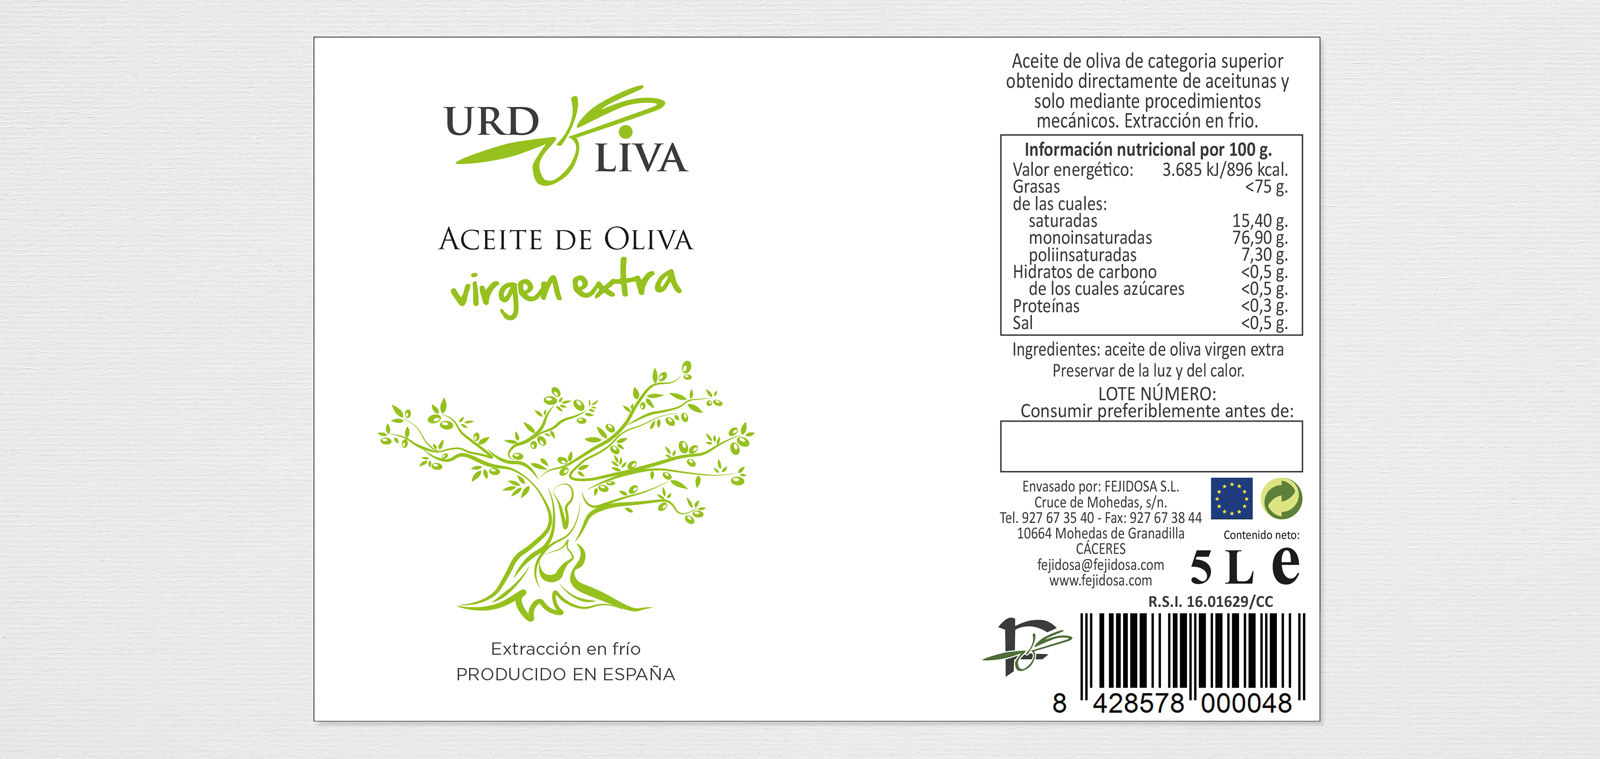 Portfolio of graphic and creative design works of extra virgin olive oil label design and packaging for URDOLIVA